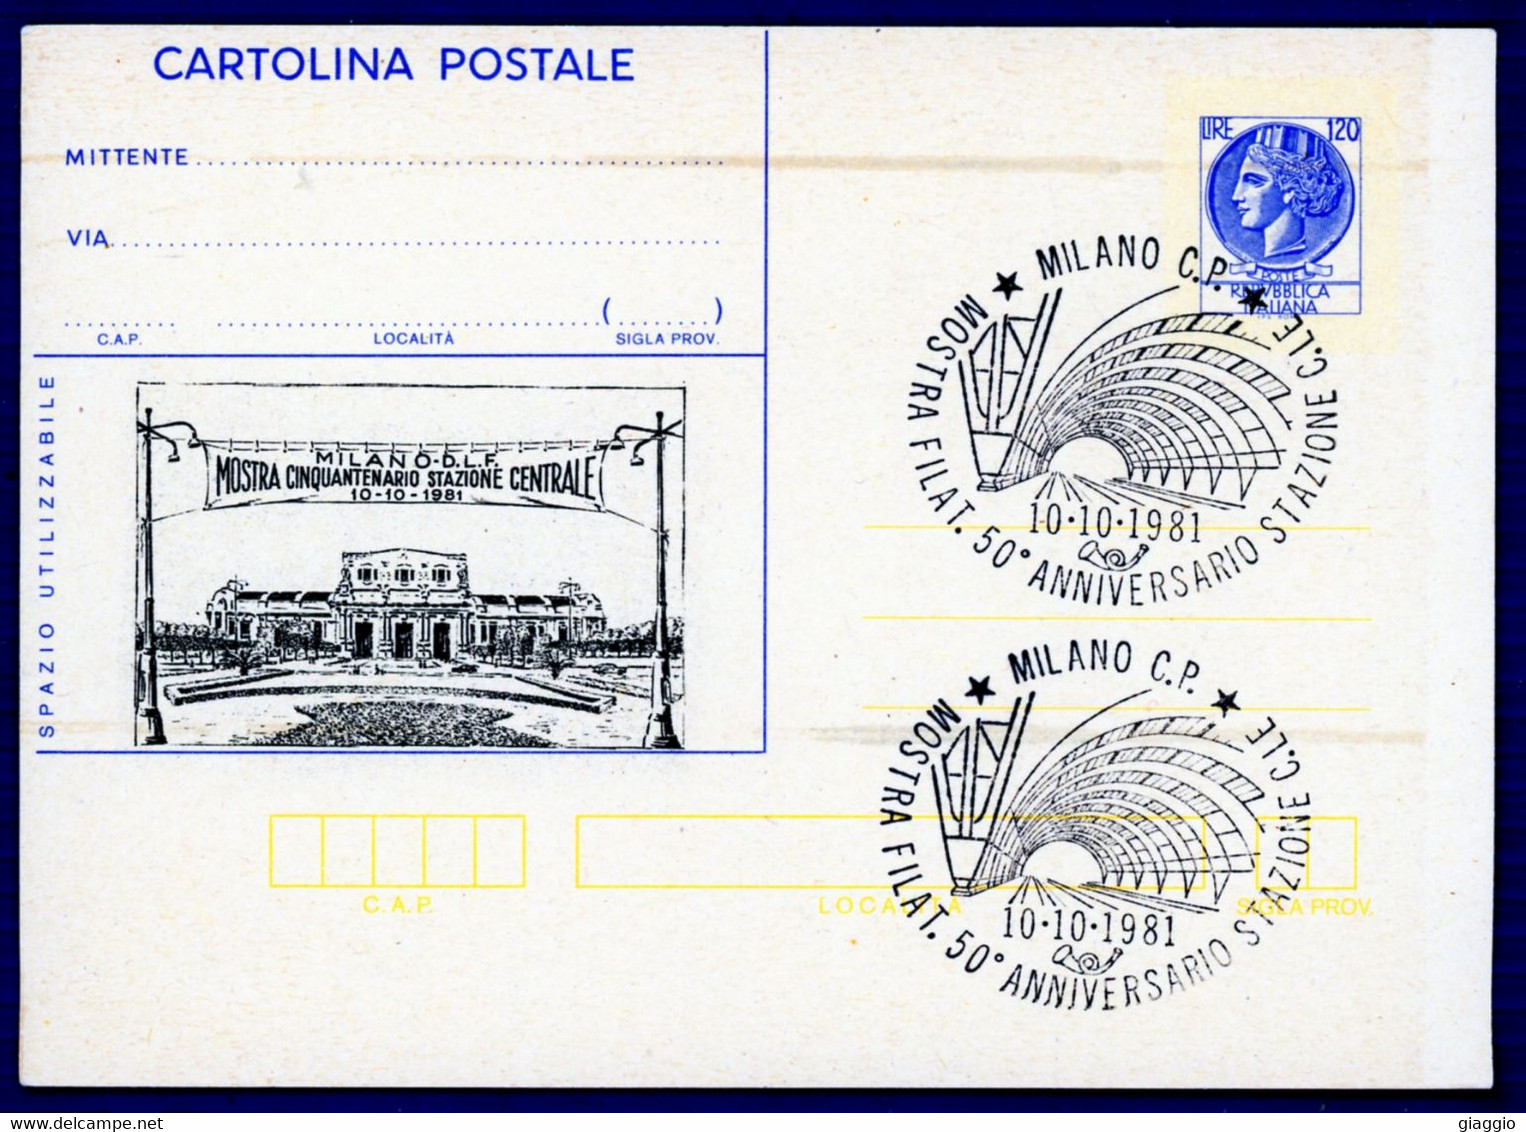 °°° Francobolli N. 4337 - Cartolina Postale Con Annullo Speciale Nuova °°° - Stamped Stationery